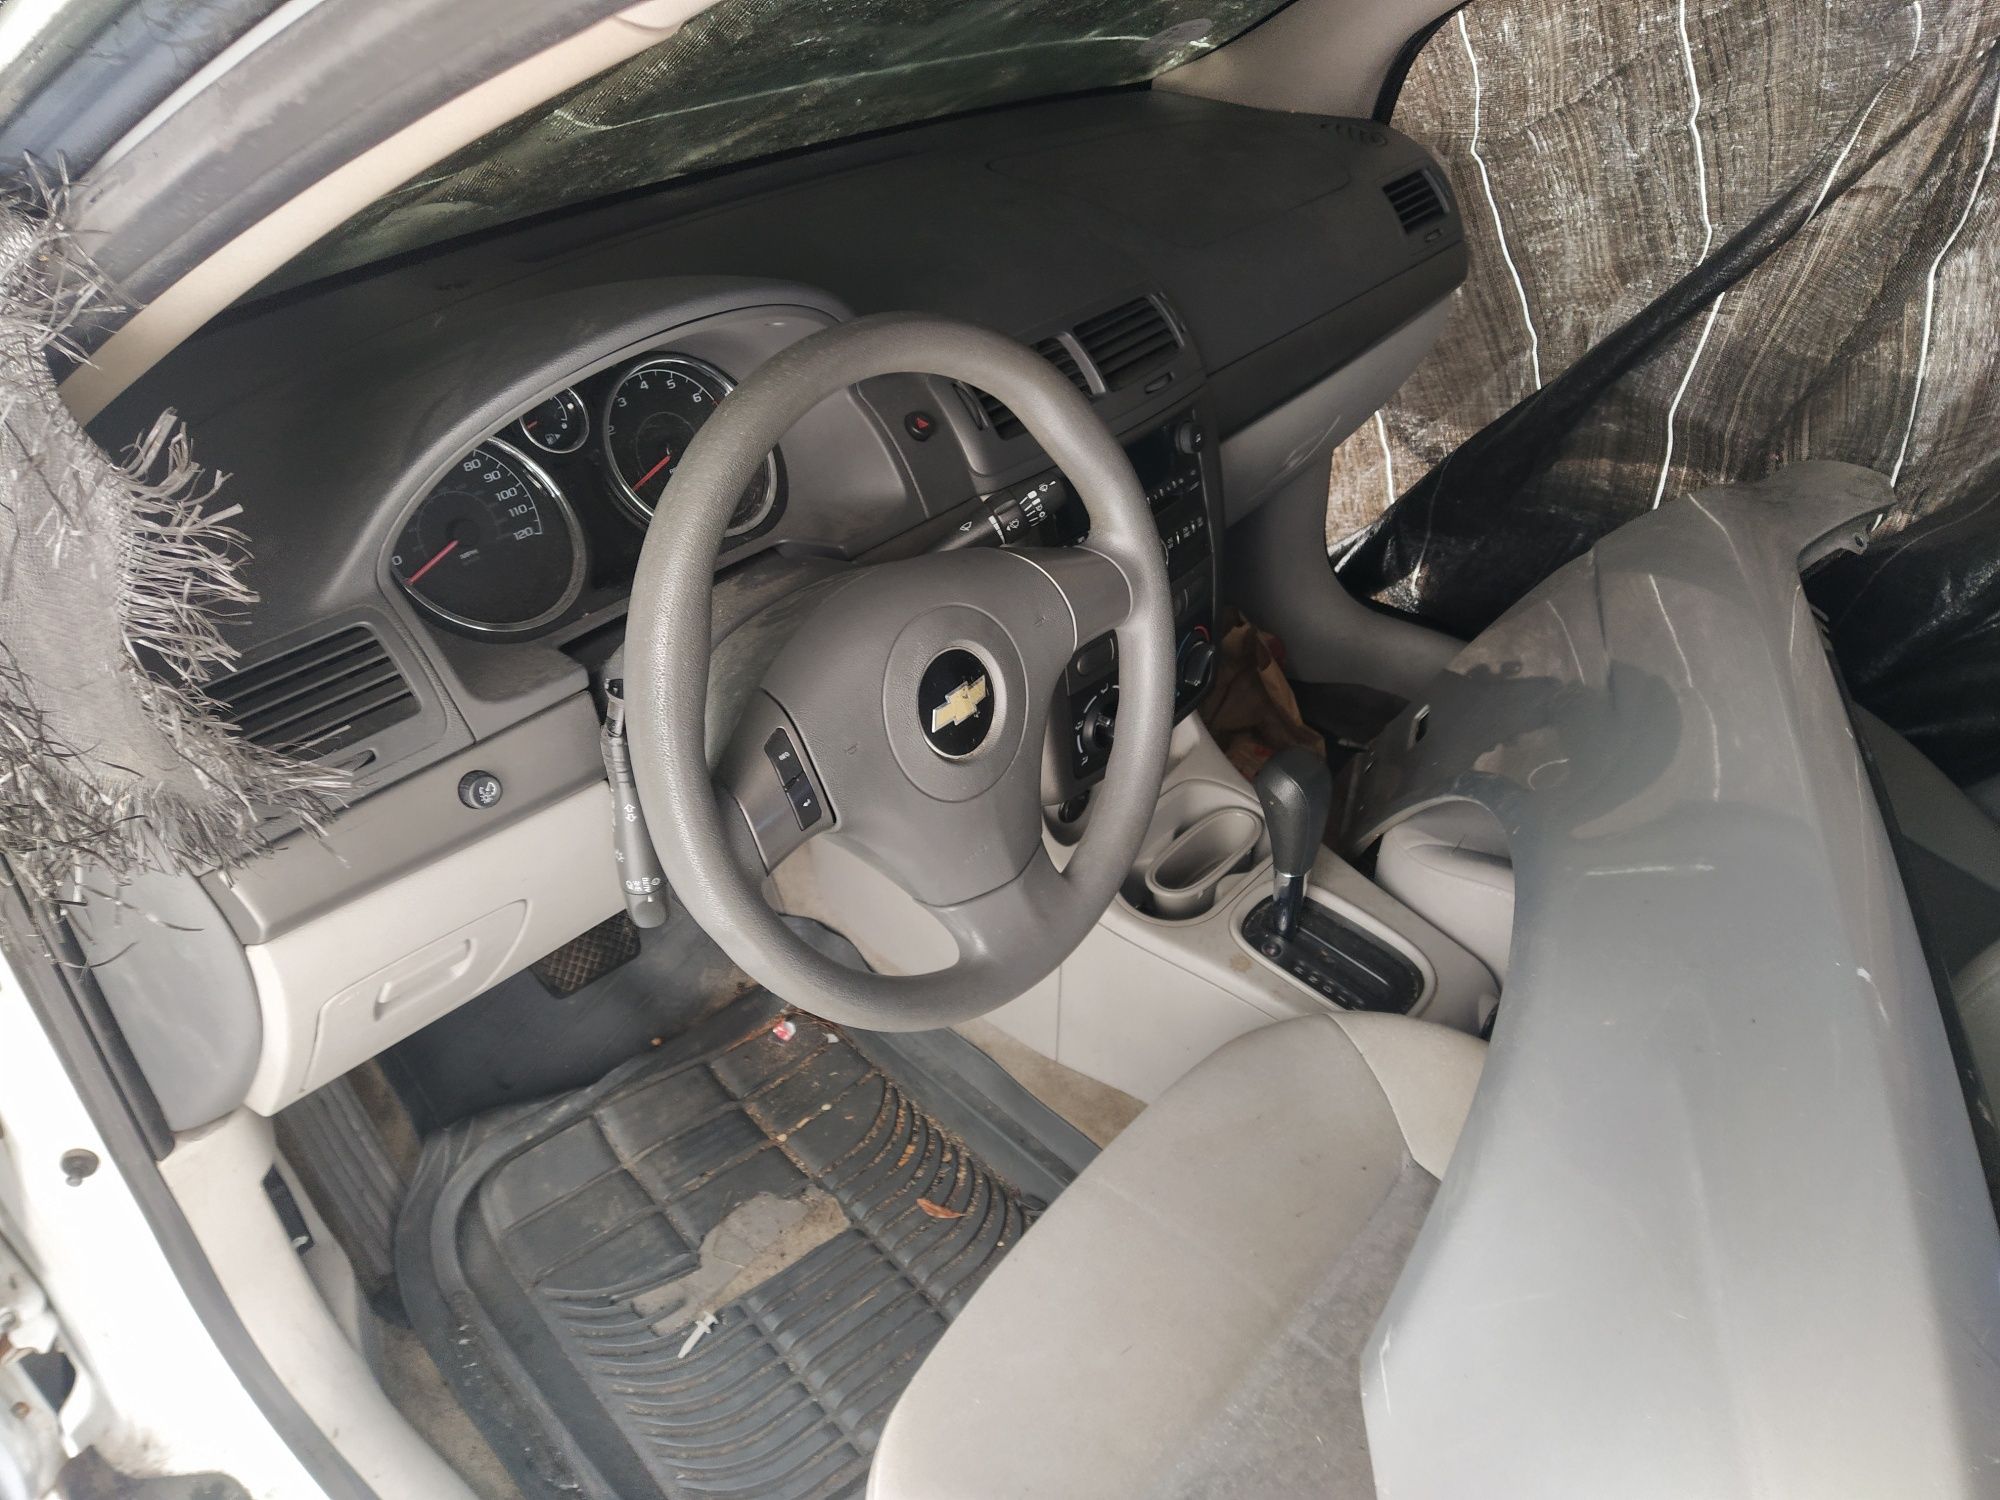 Chewrolet cobalt airbag kierowcy